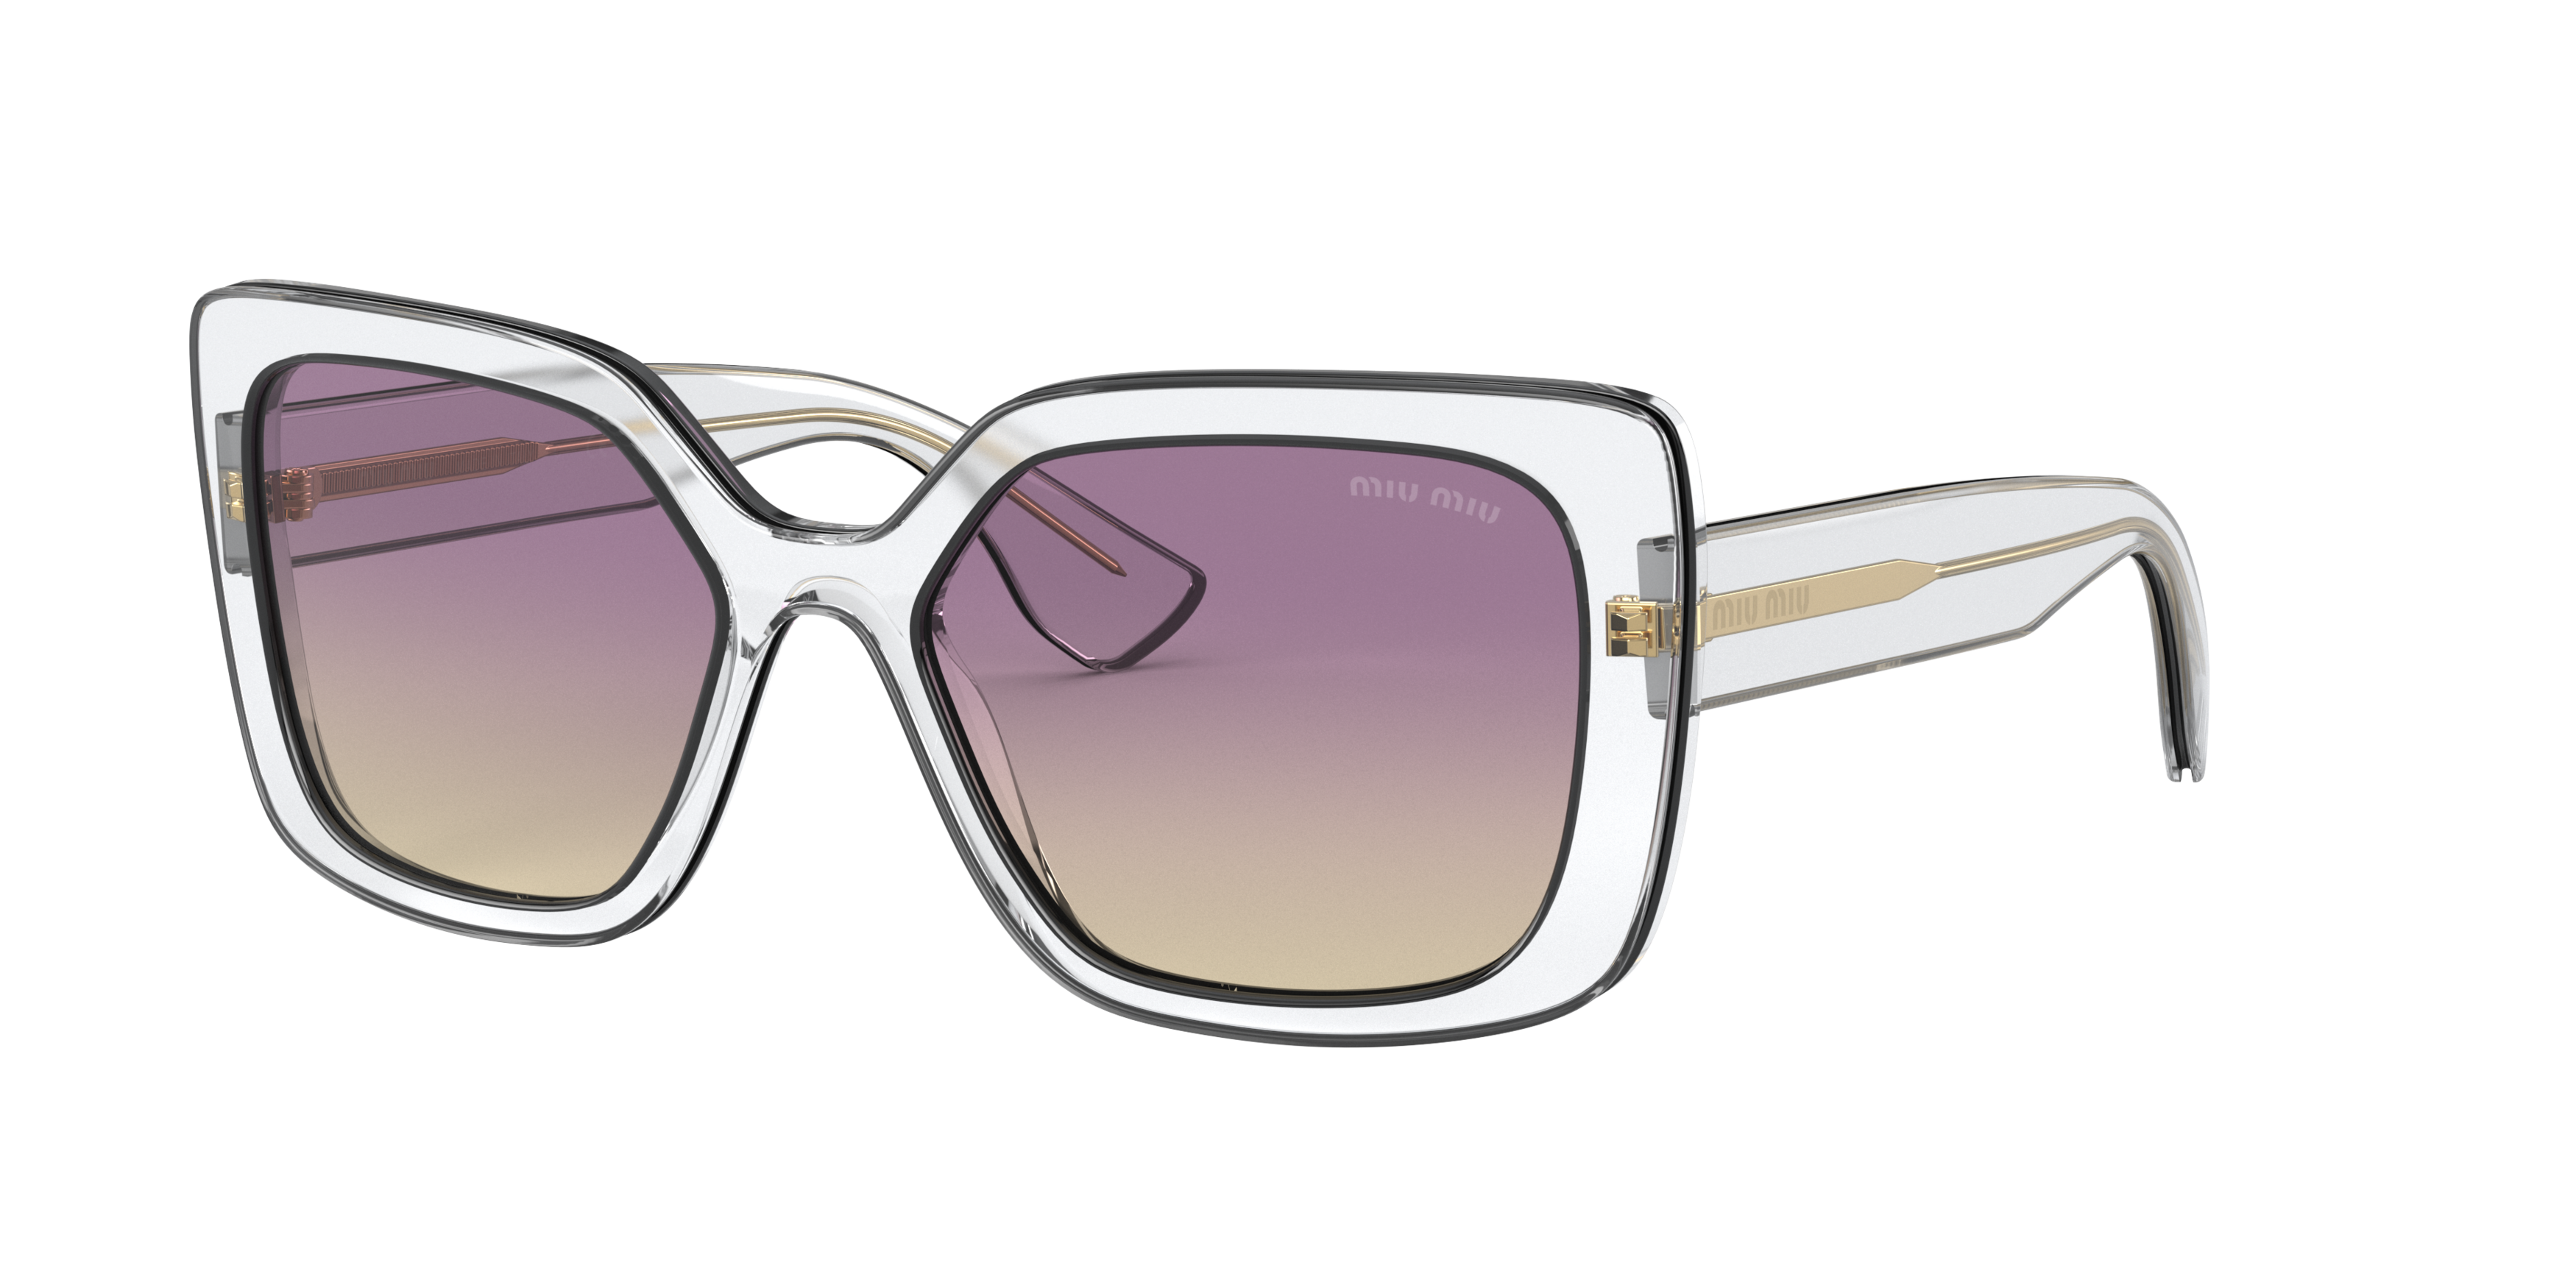 Angle_Left01 Miu Miu MU 09VS Sunglasses Violet / Transparent, Clear